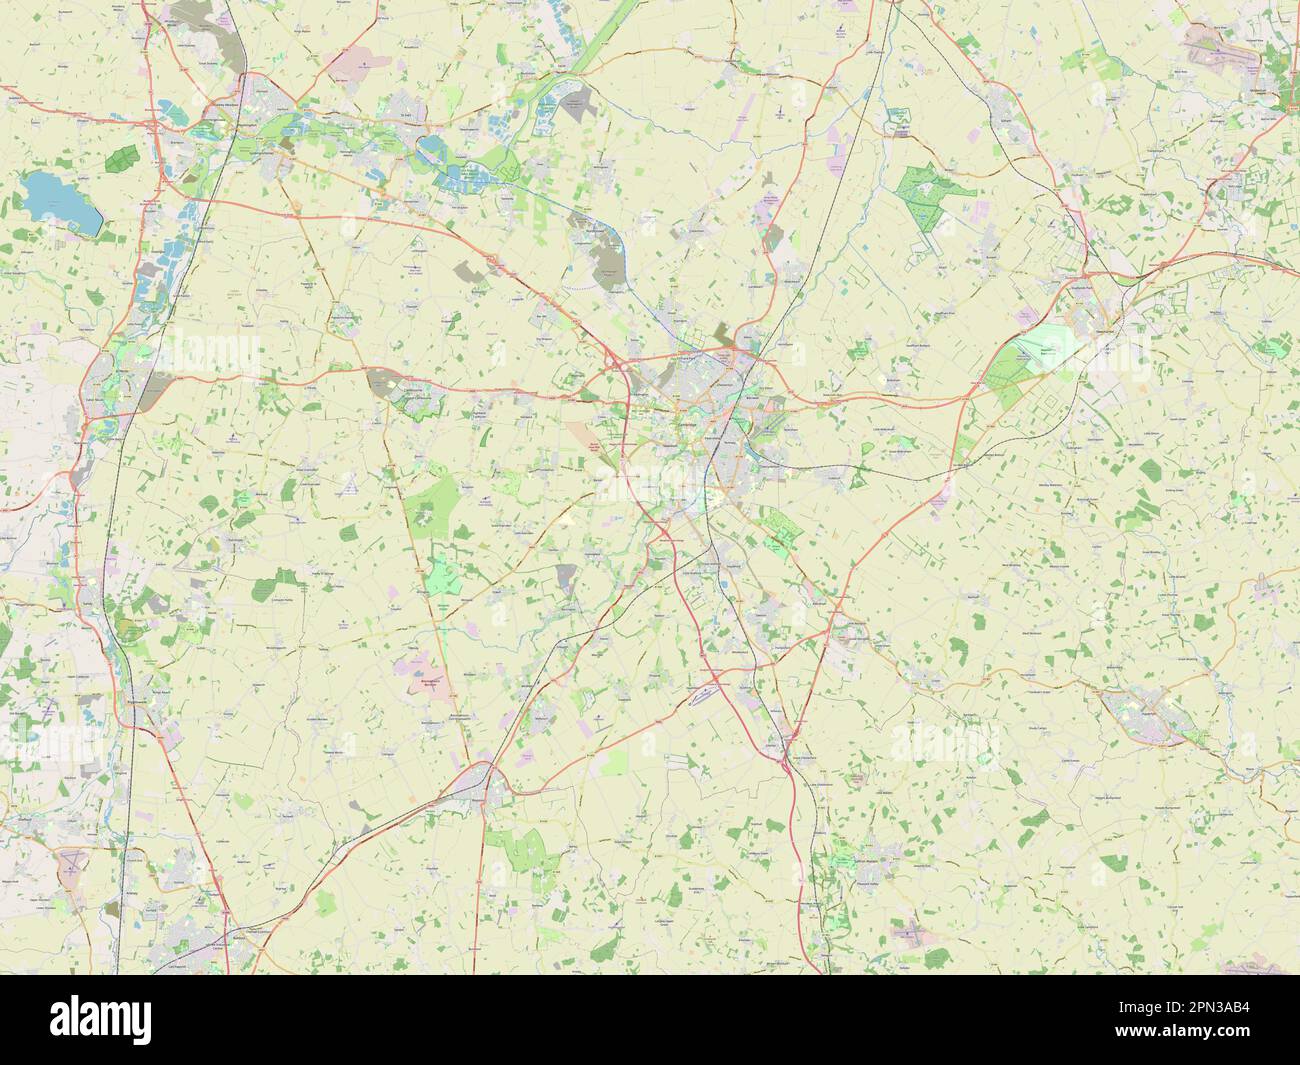 South Cambridgeshire, non metropolitan district of England - Great Britain. Open Street Map Stock Photo